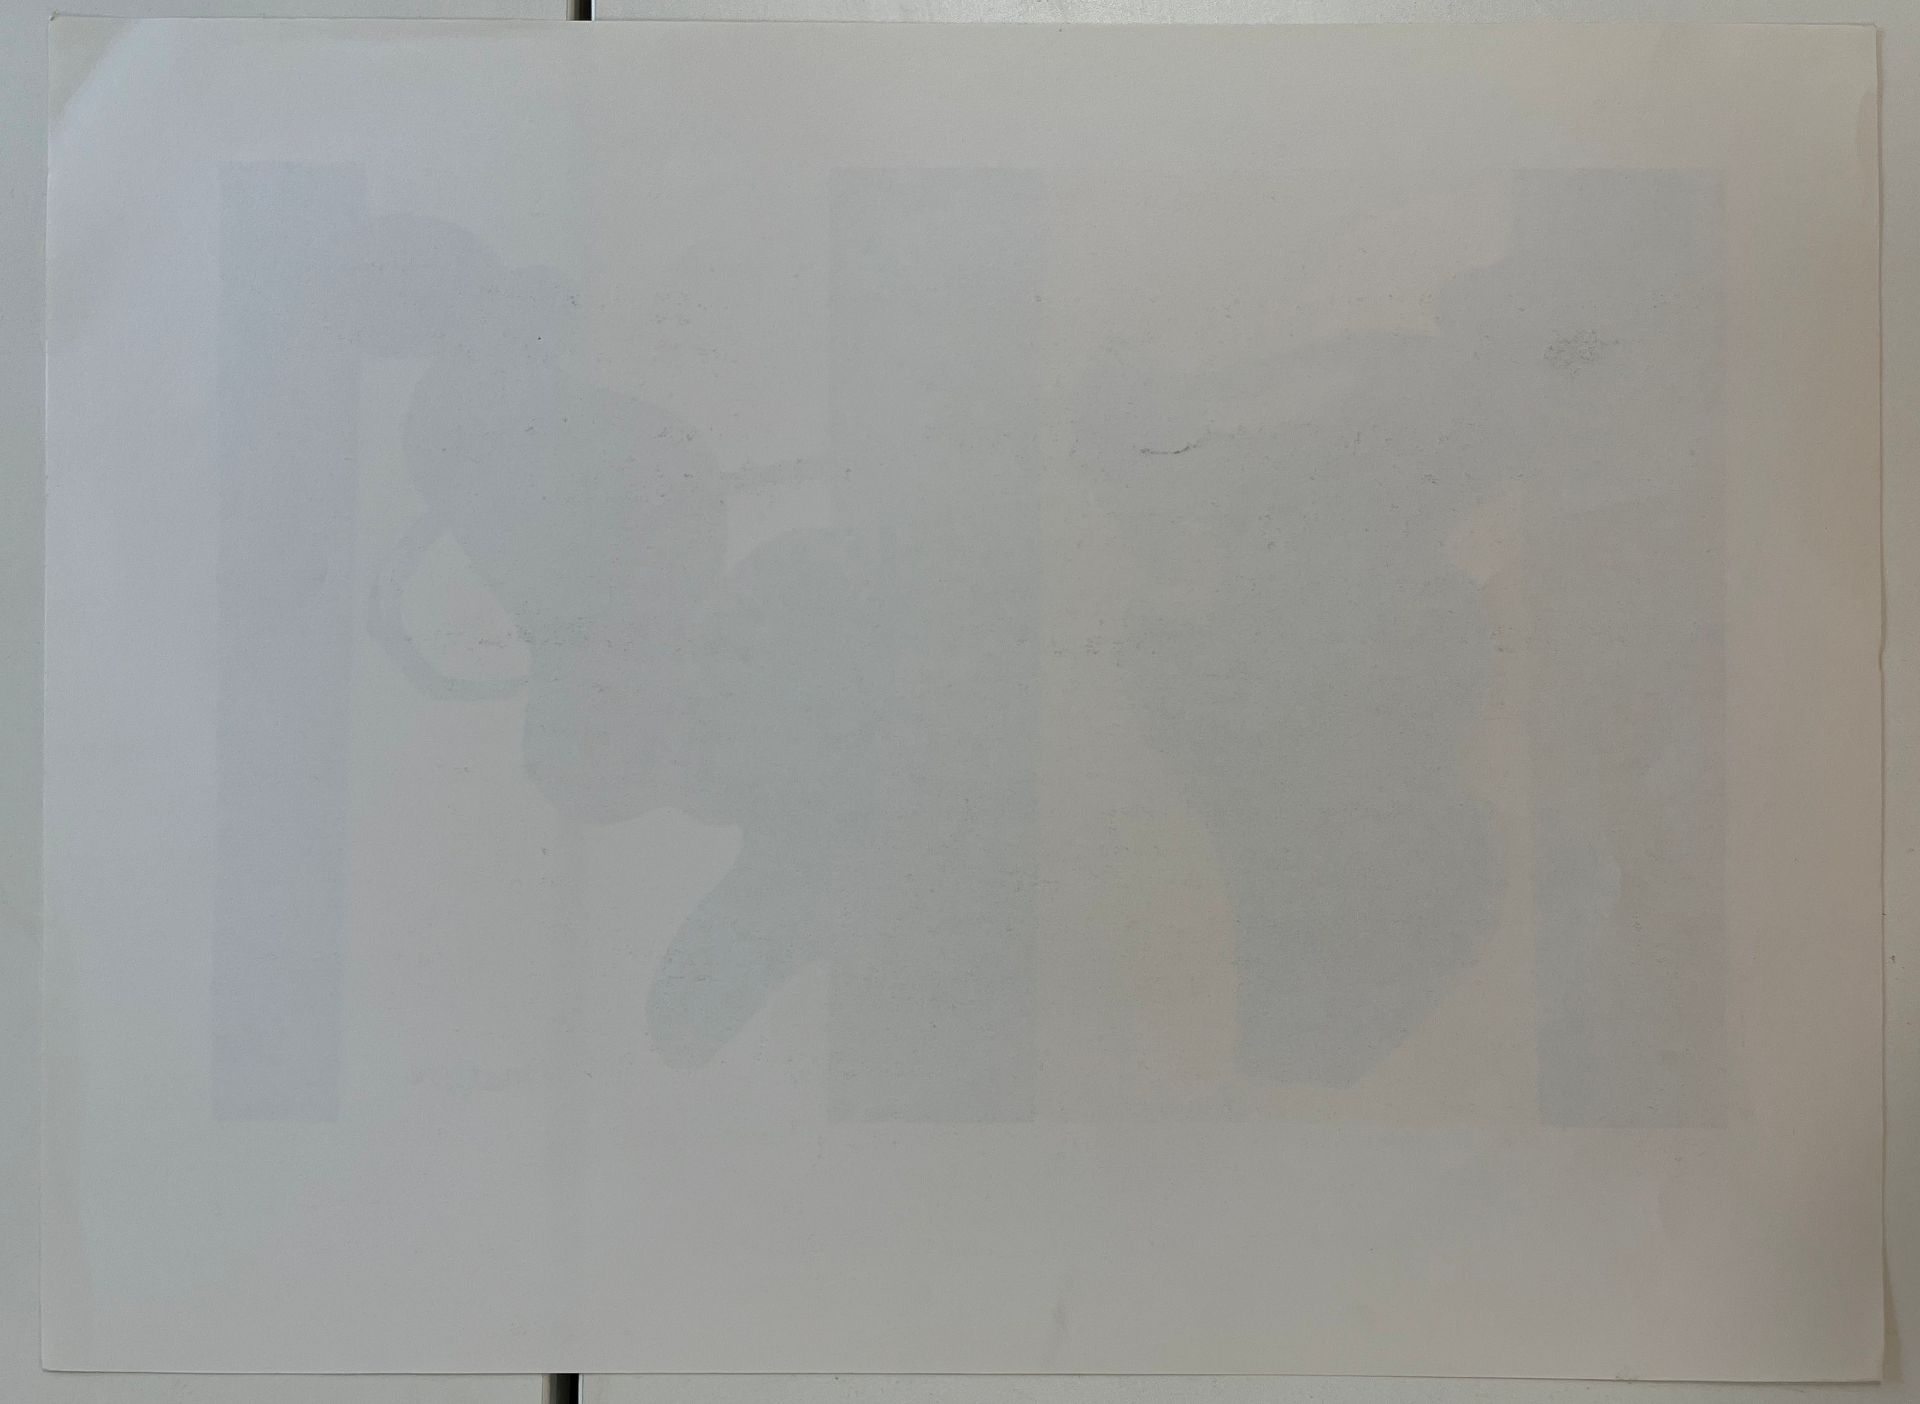 SIX VINTAGE LITHOGRAPHS ON PAPER AFTER HENRI MATISSE - Image 6 of 19